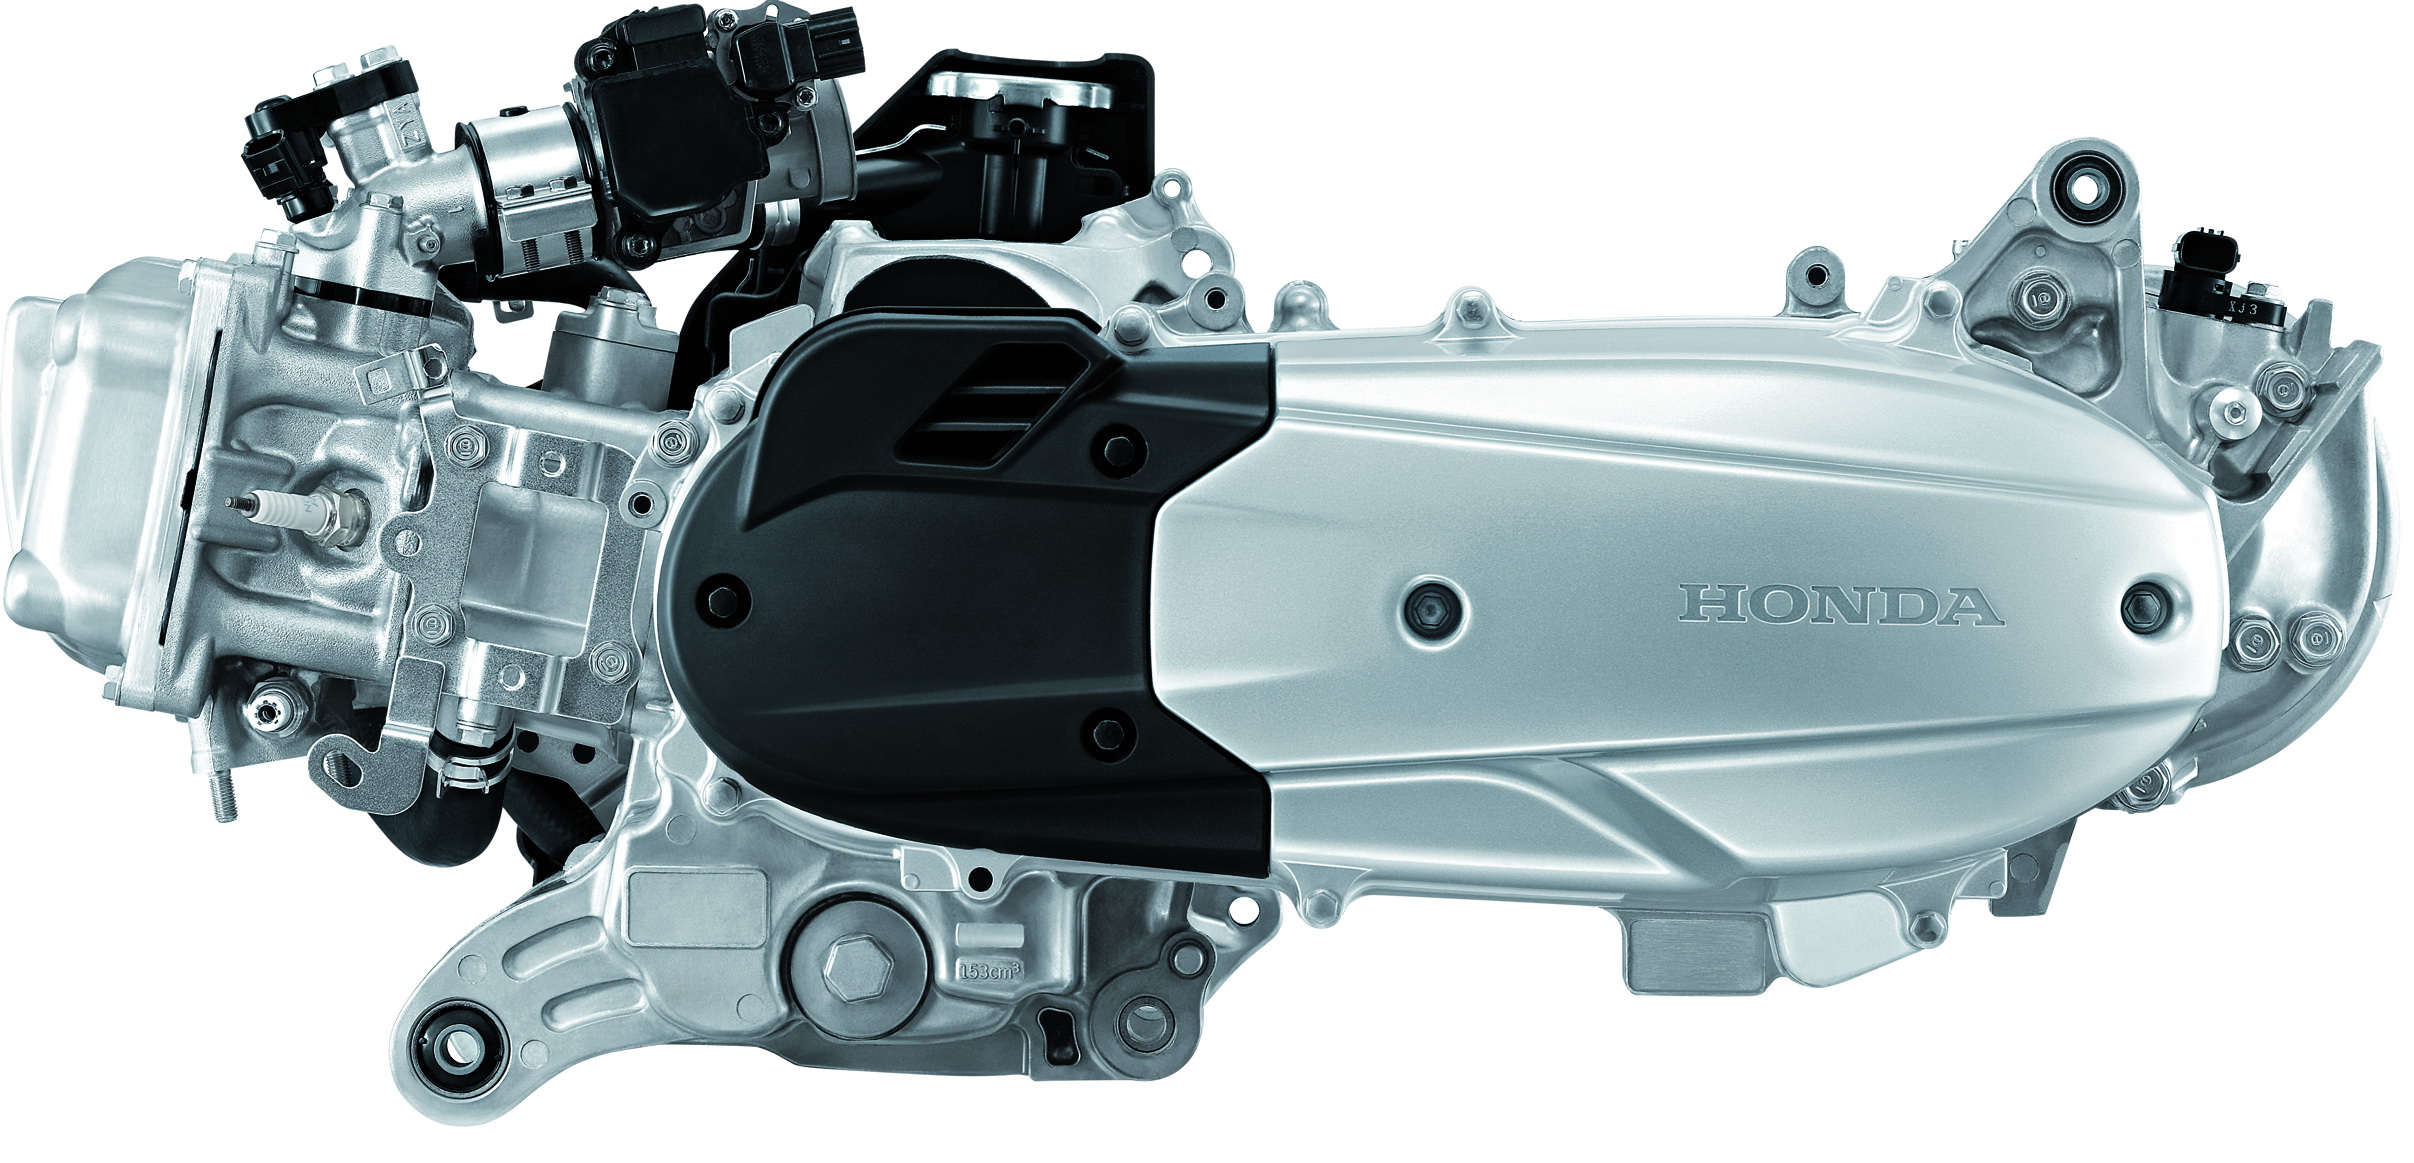 Мотор скутера 150 кубов. Honda 150 кубов мотор. Двигатель 125 кубов на скутер Хонда. Двигатель Honda 2500 PGM-Fi. ESP+Motor Honda.